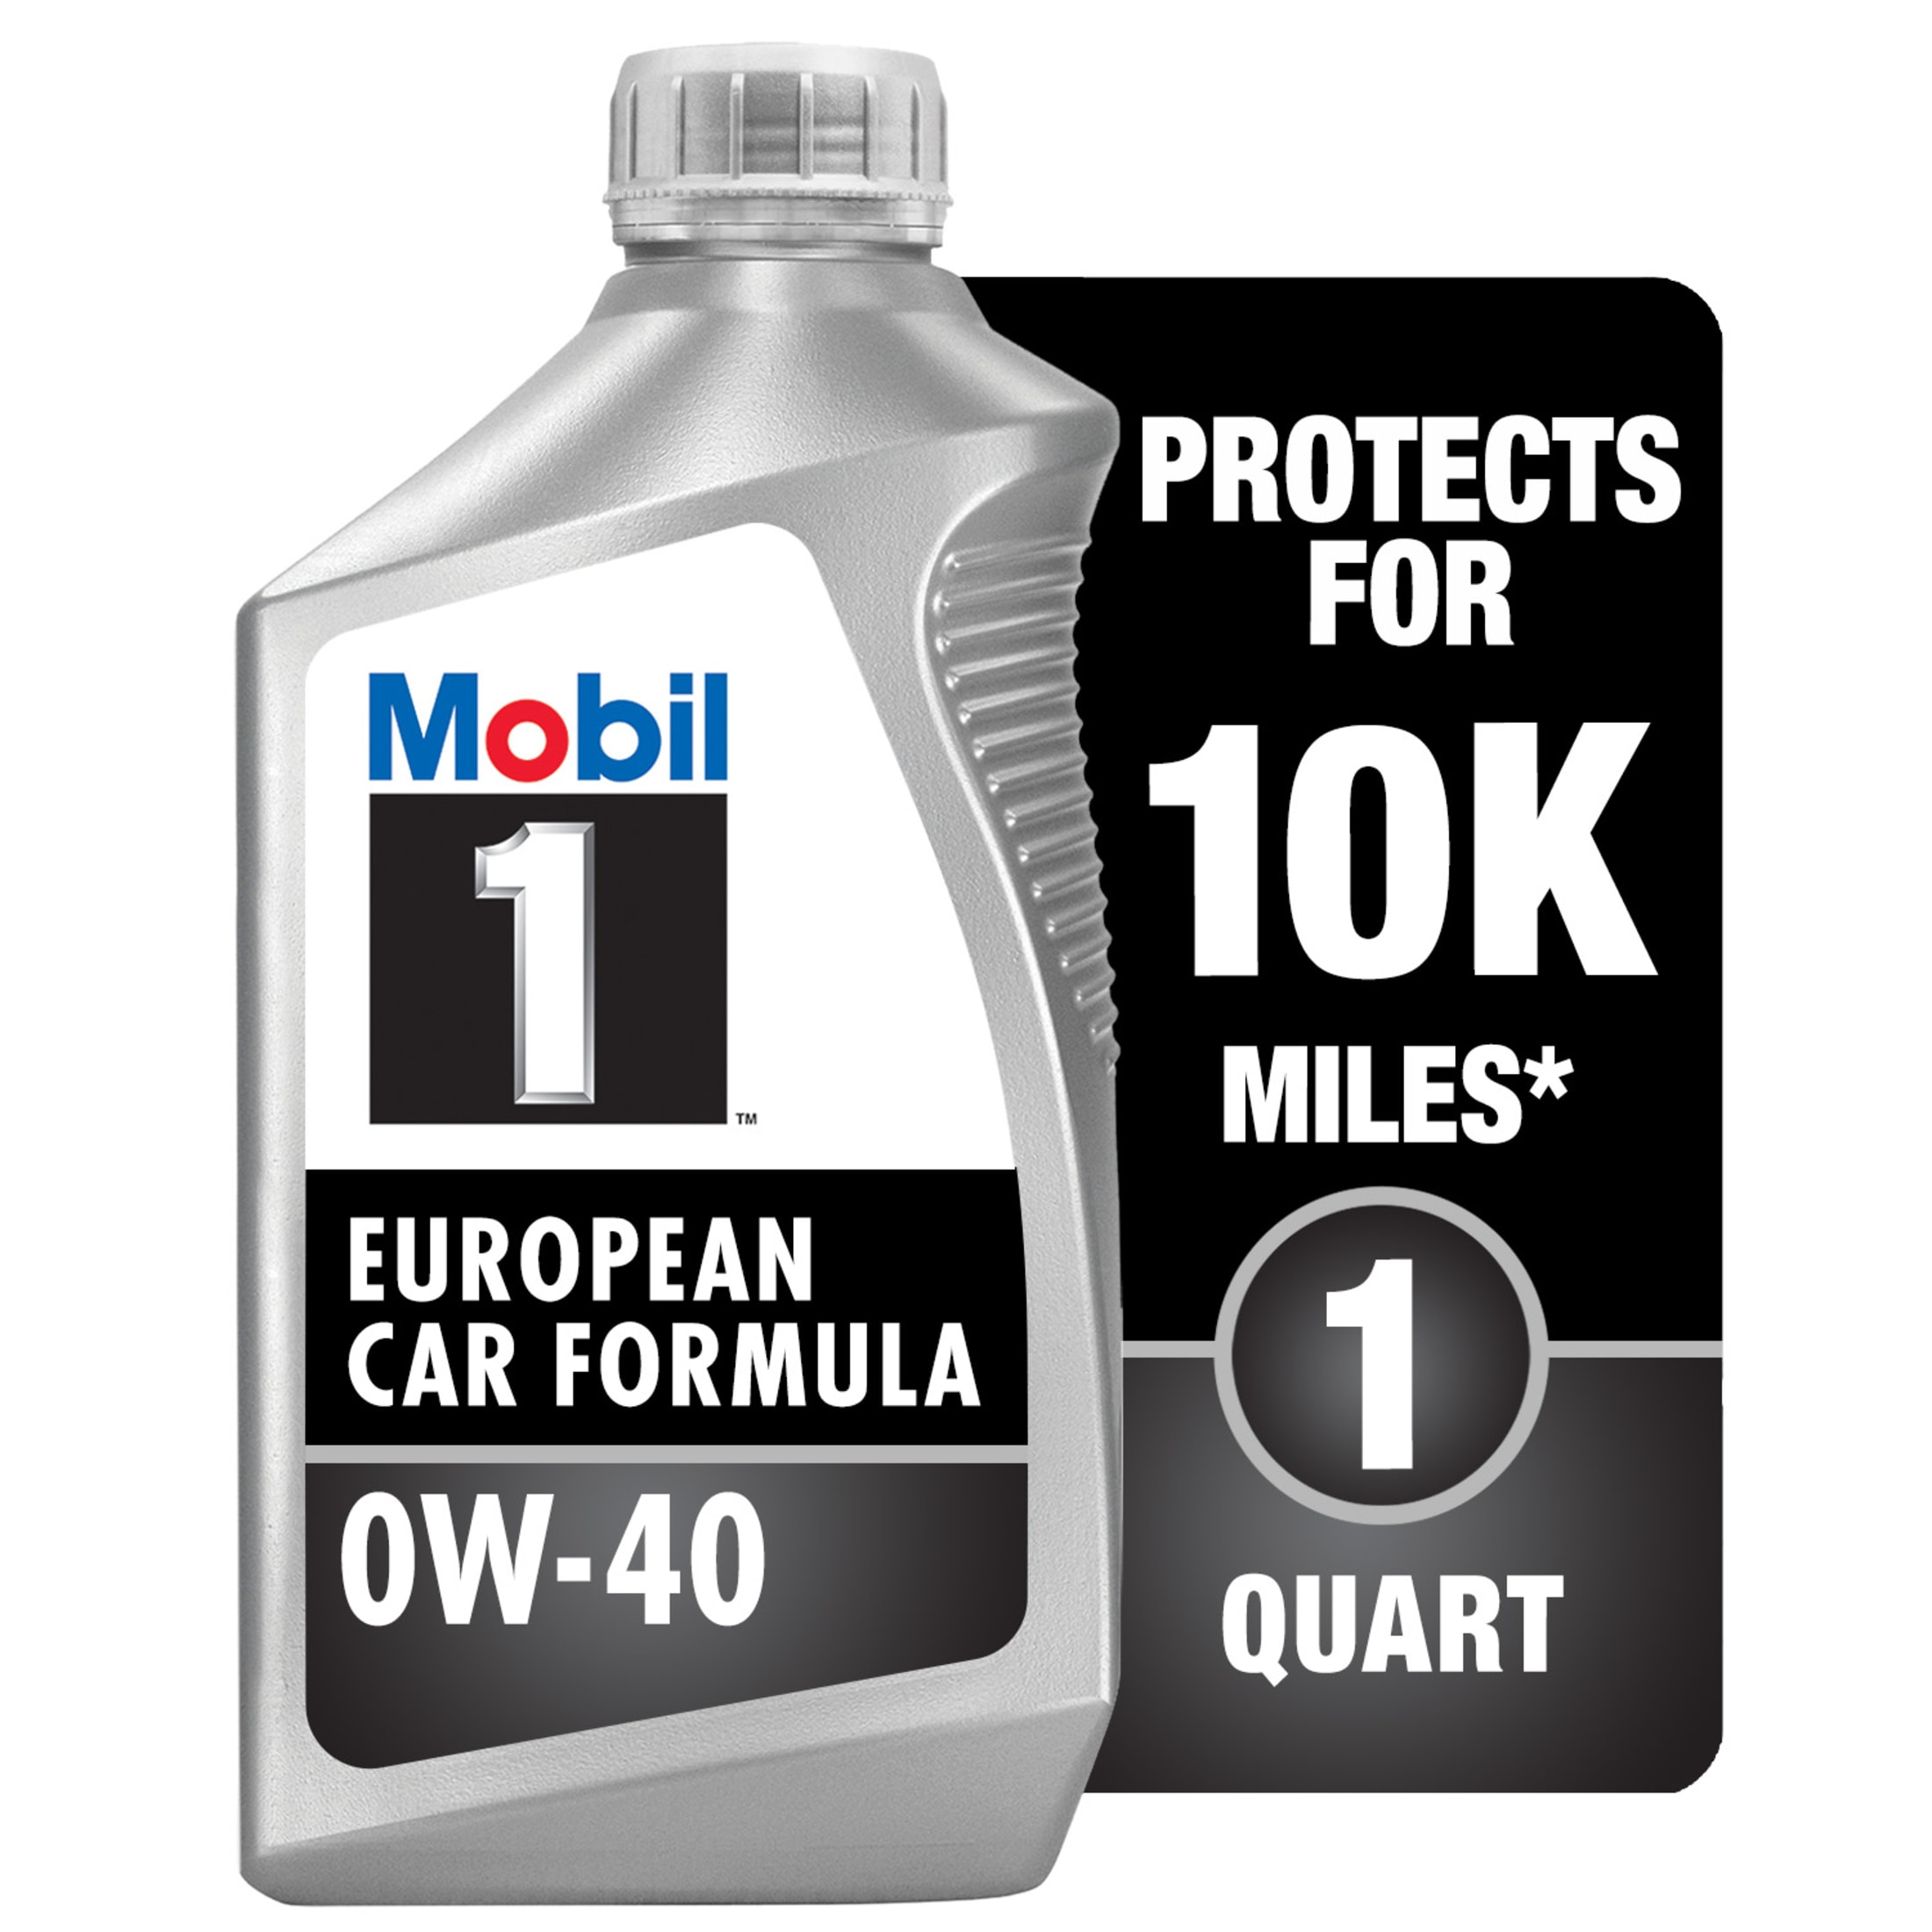 Mobil 1 FS European Car Formula Full Synthetic Motor Oil 0W-40, 1 Quart - image 2 of 8